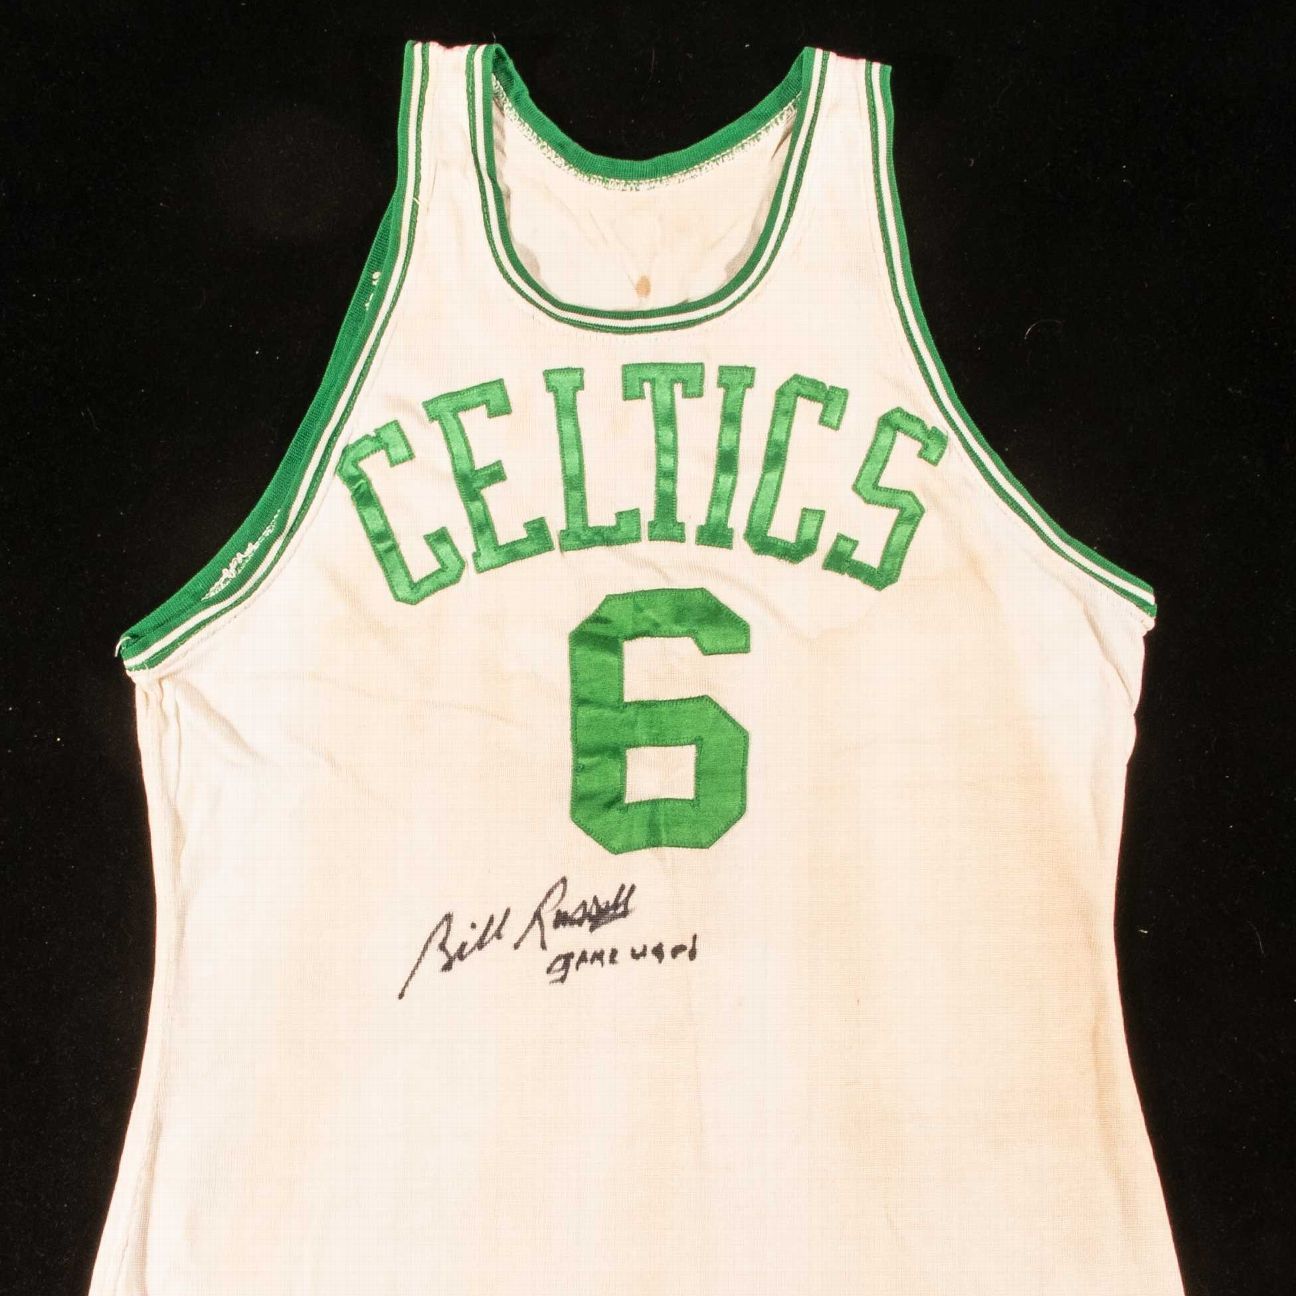 Celtics' Bill Russell alternate jerseys, explained: The details